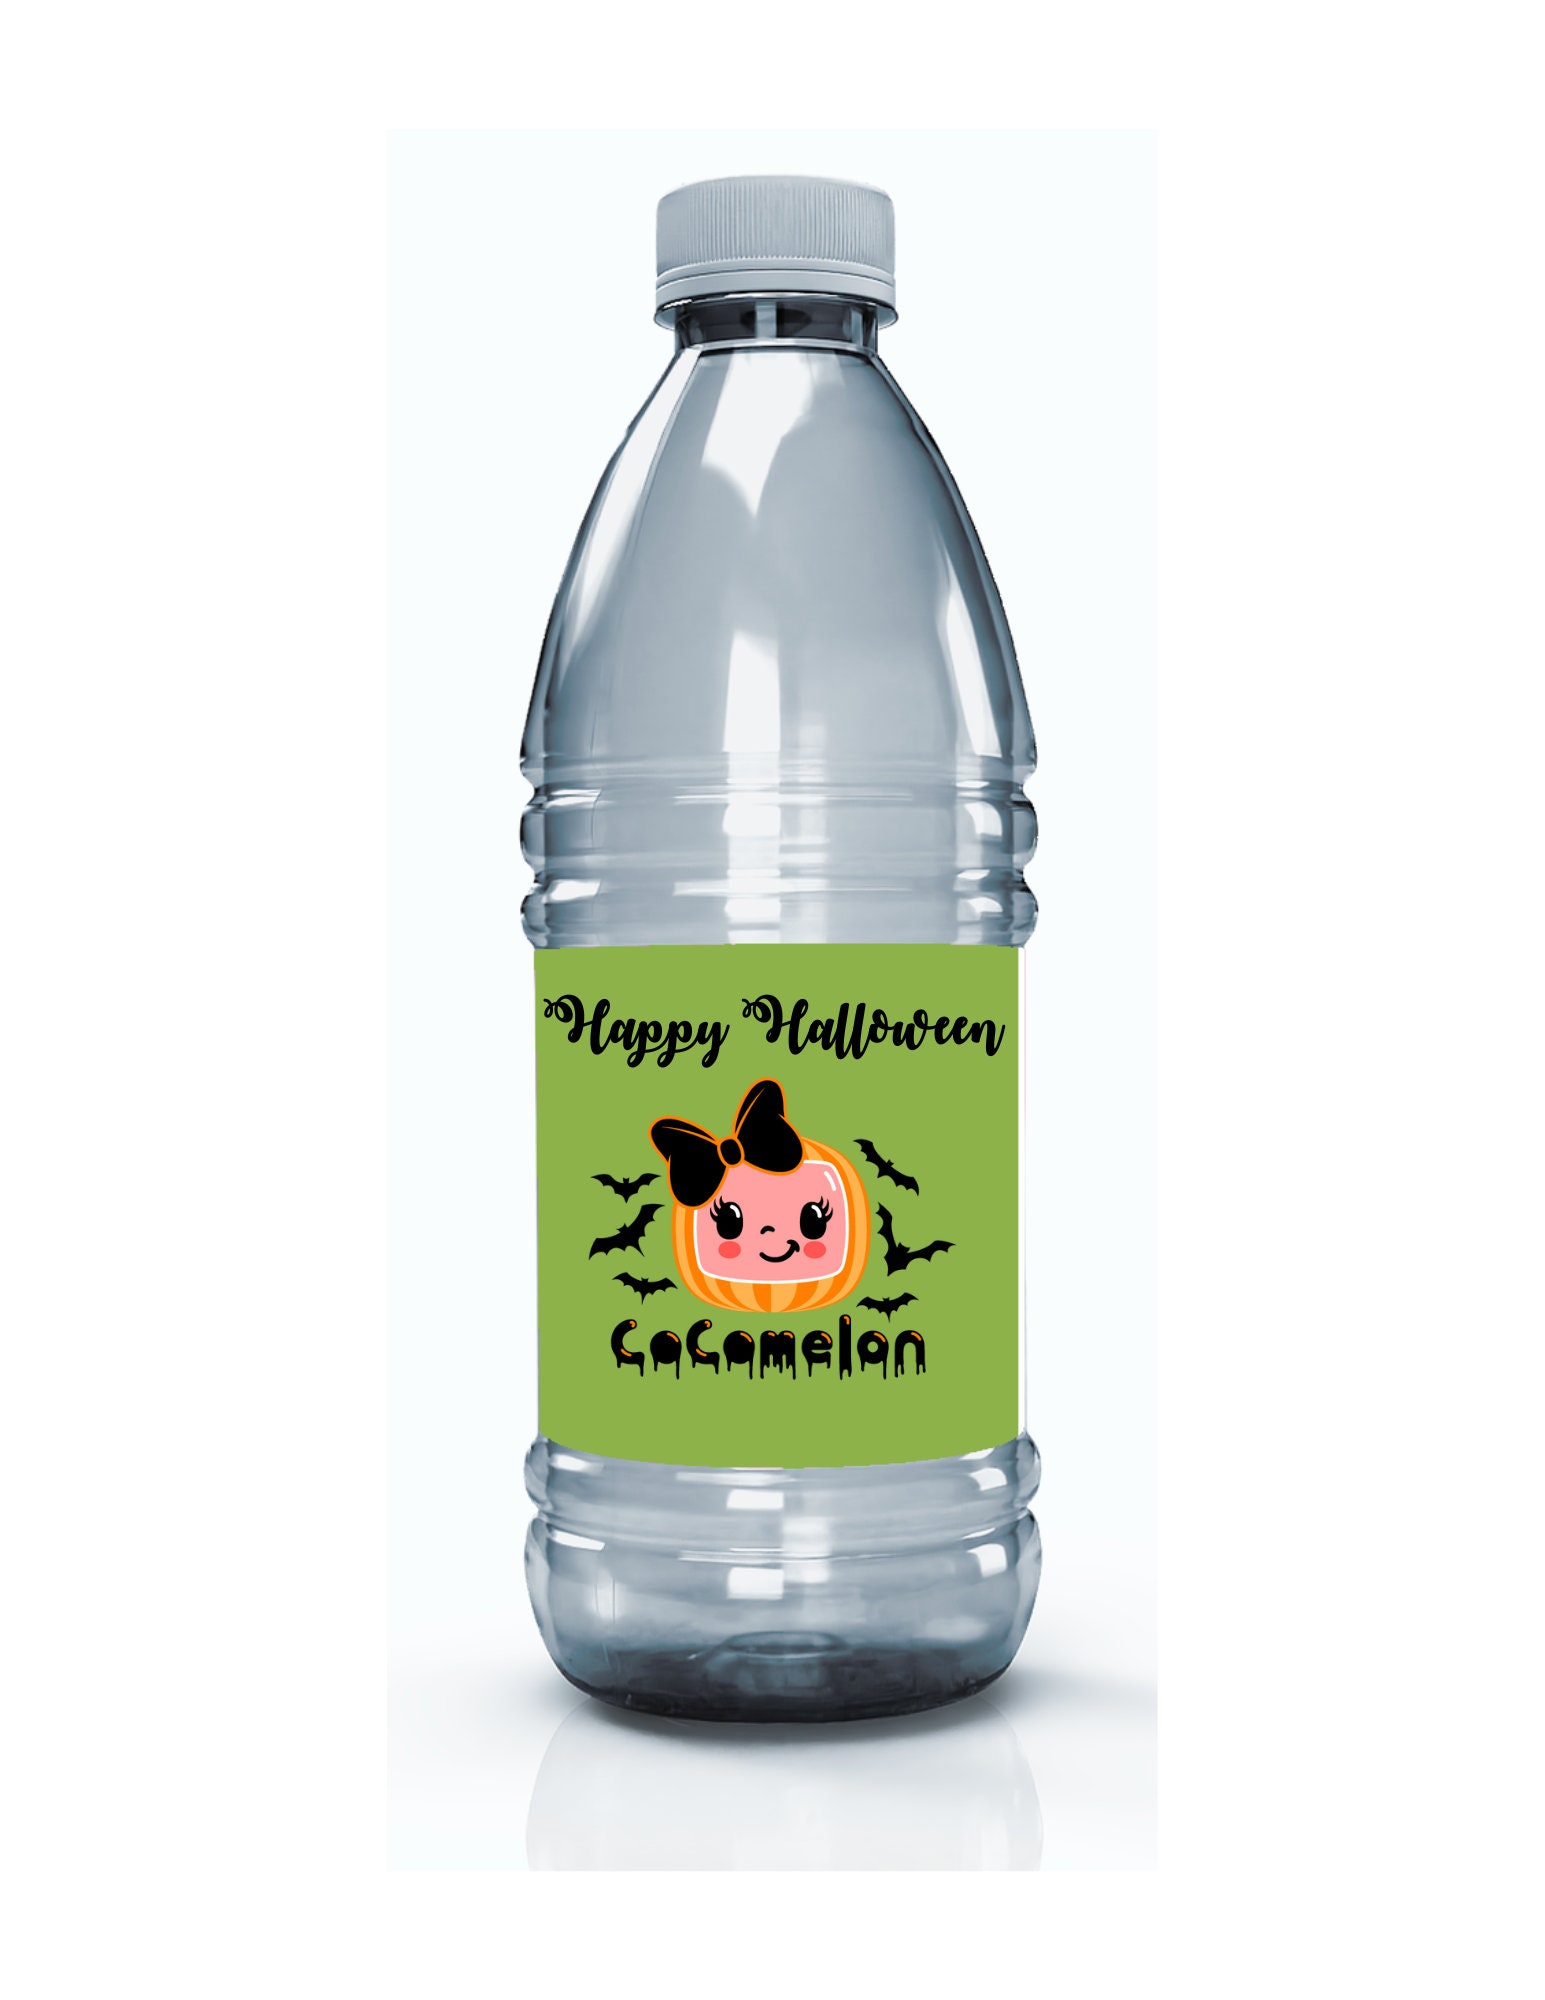 Cocomelon Watermelon Water Bottle Labels